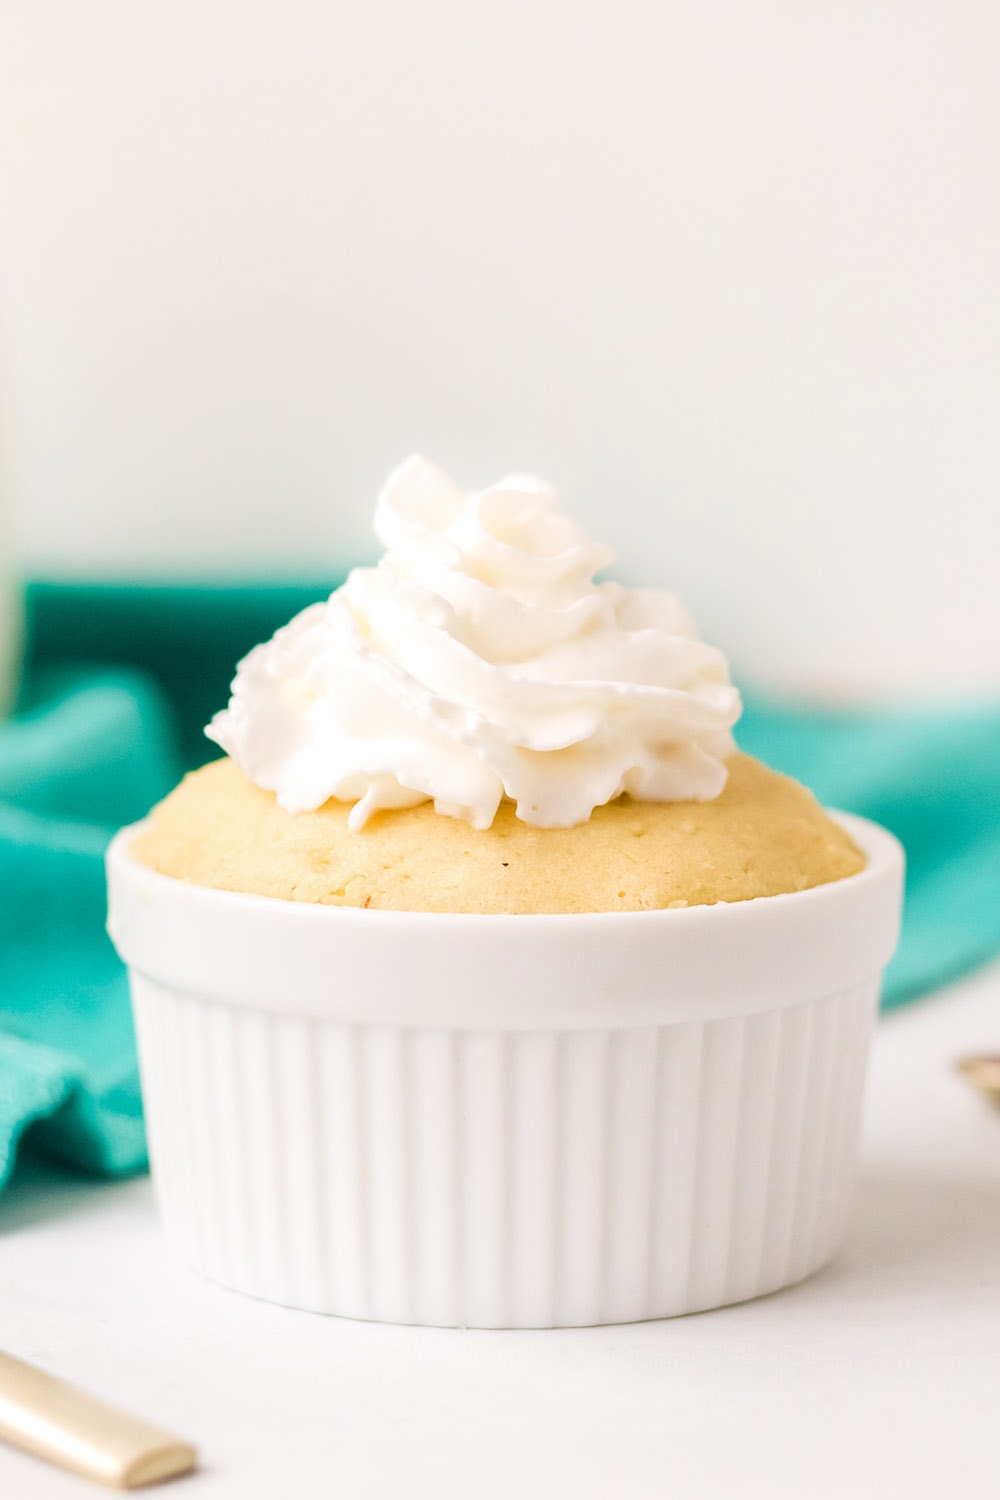 Keto vanilla mug cake topped with whipped cream by a green napkin.